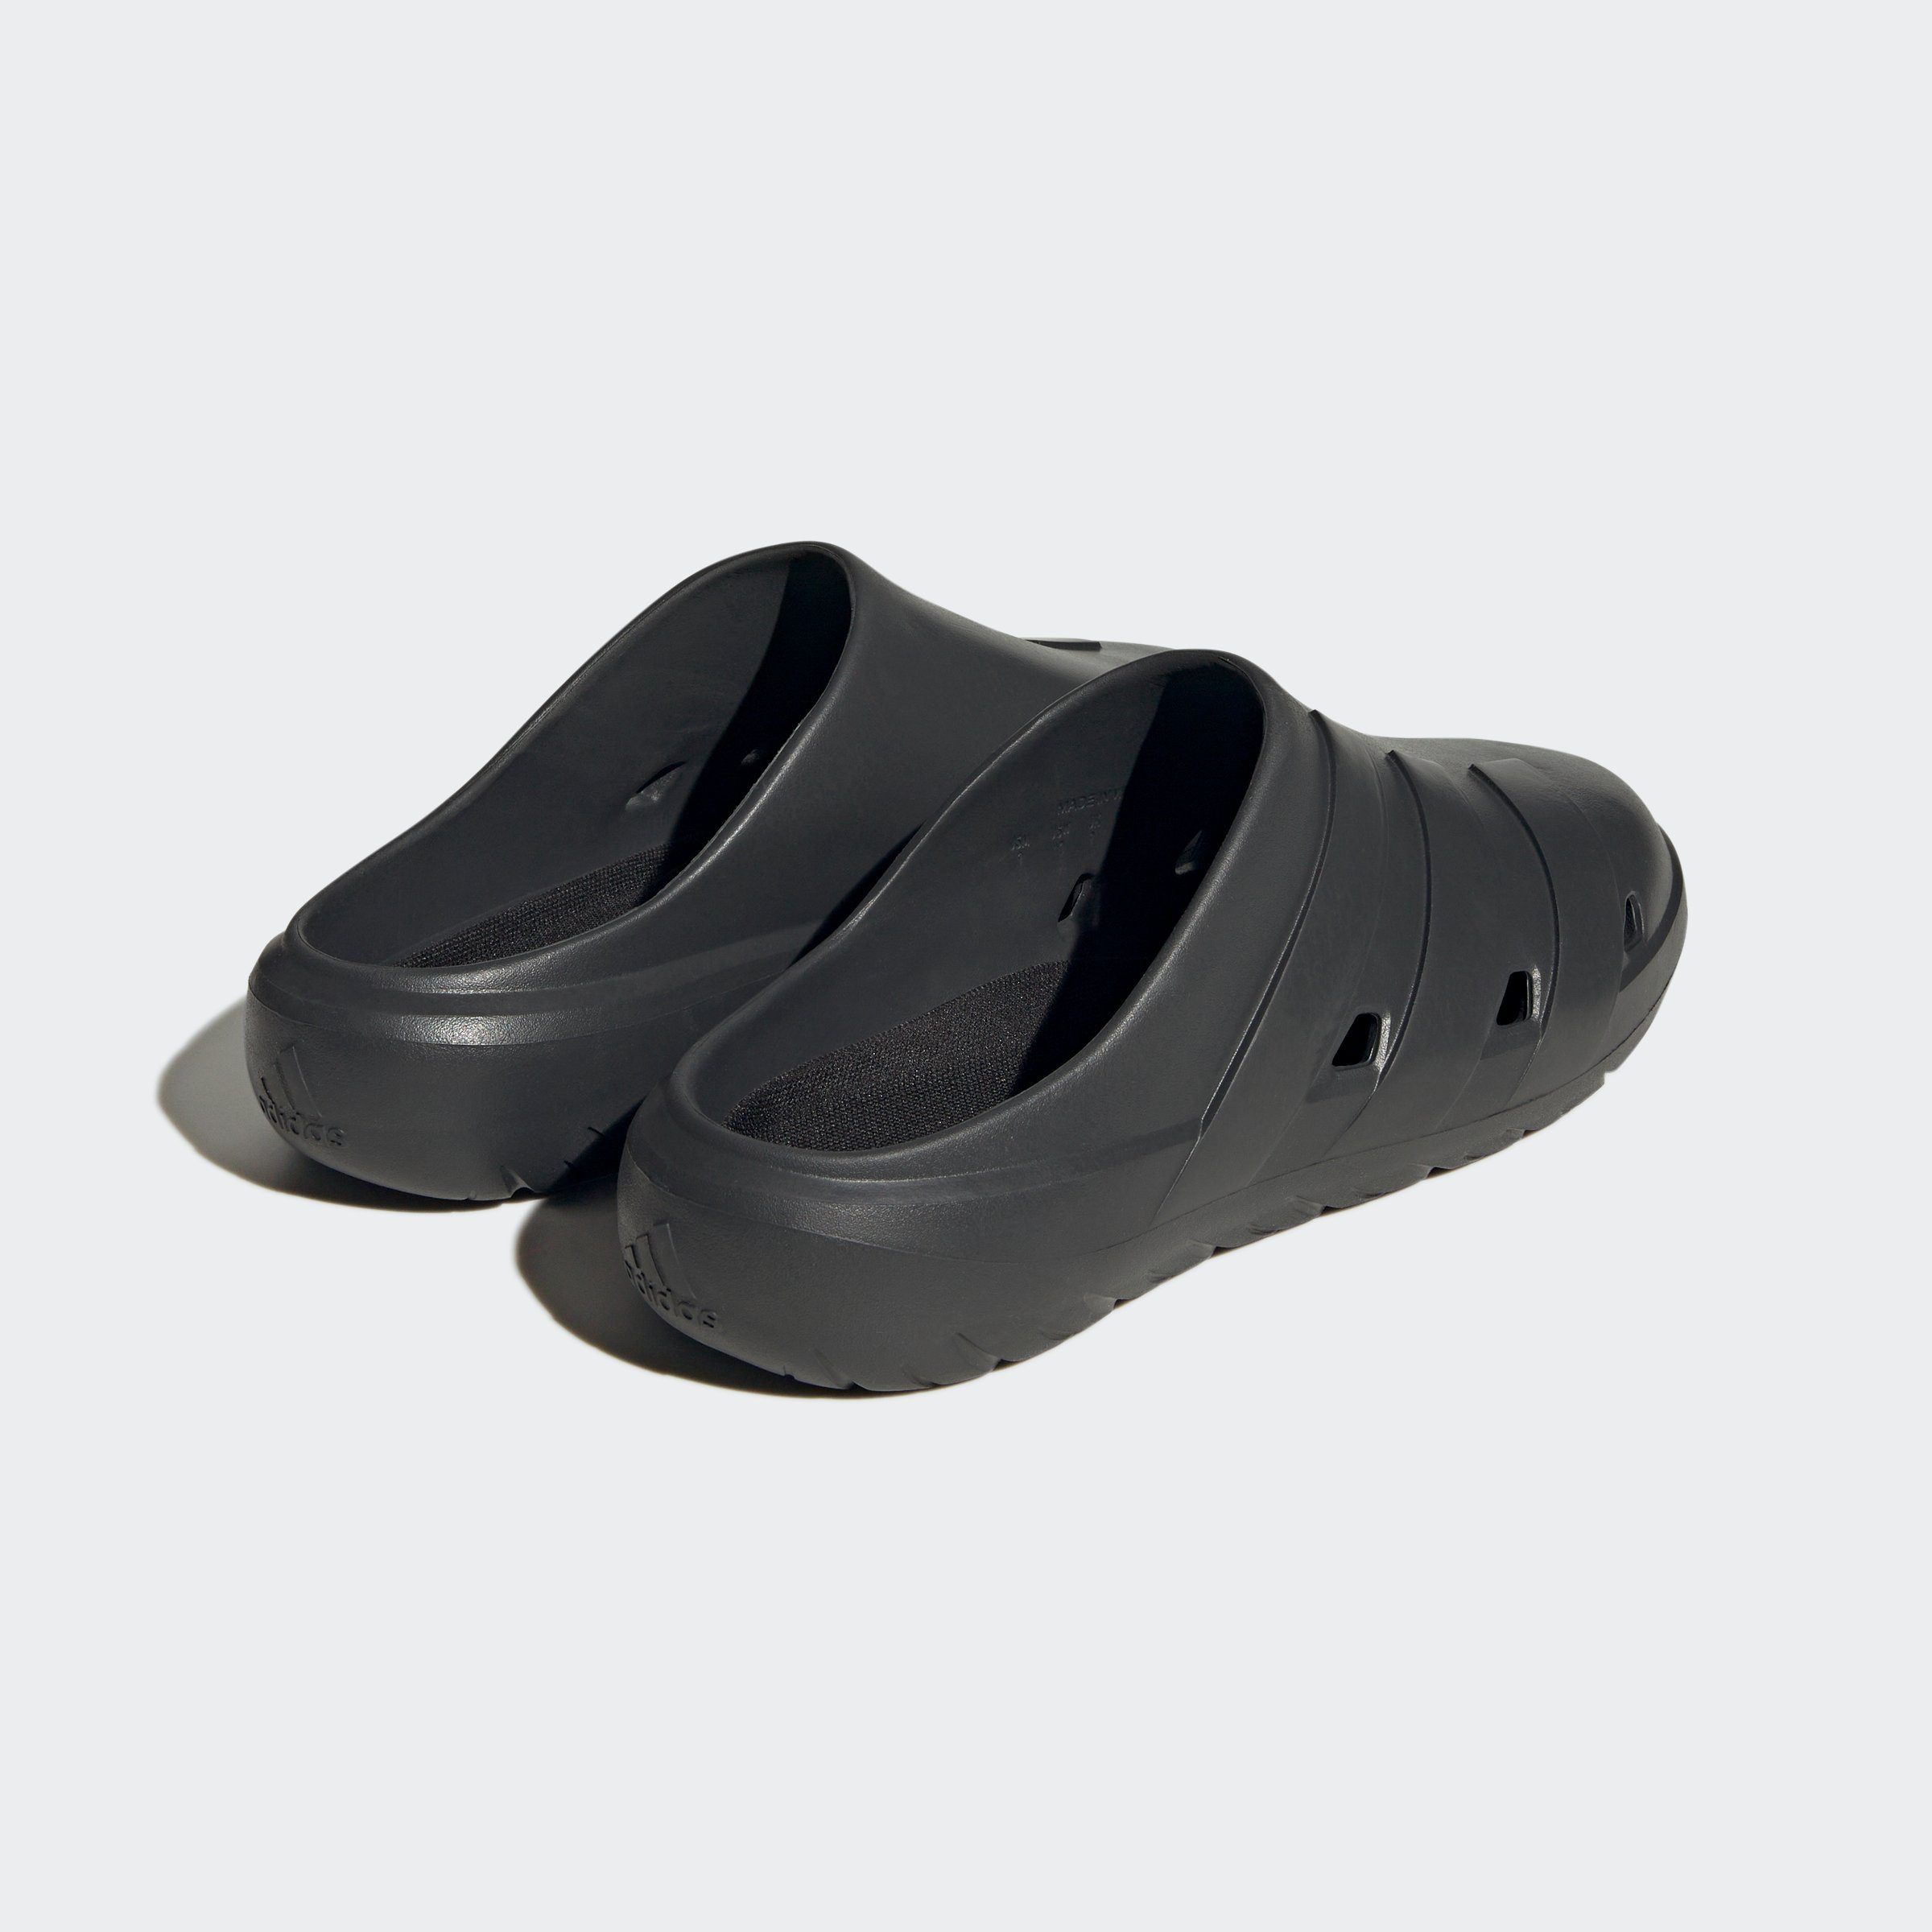 Core CLOG adidas / Clog Carbon Black Sportswear / ADICANE Carbon